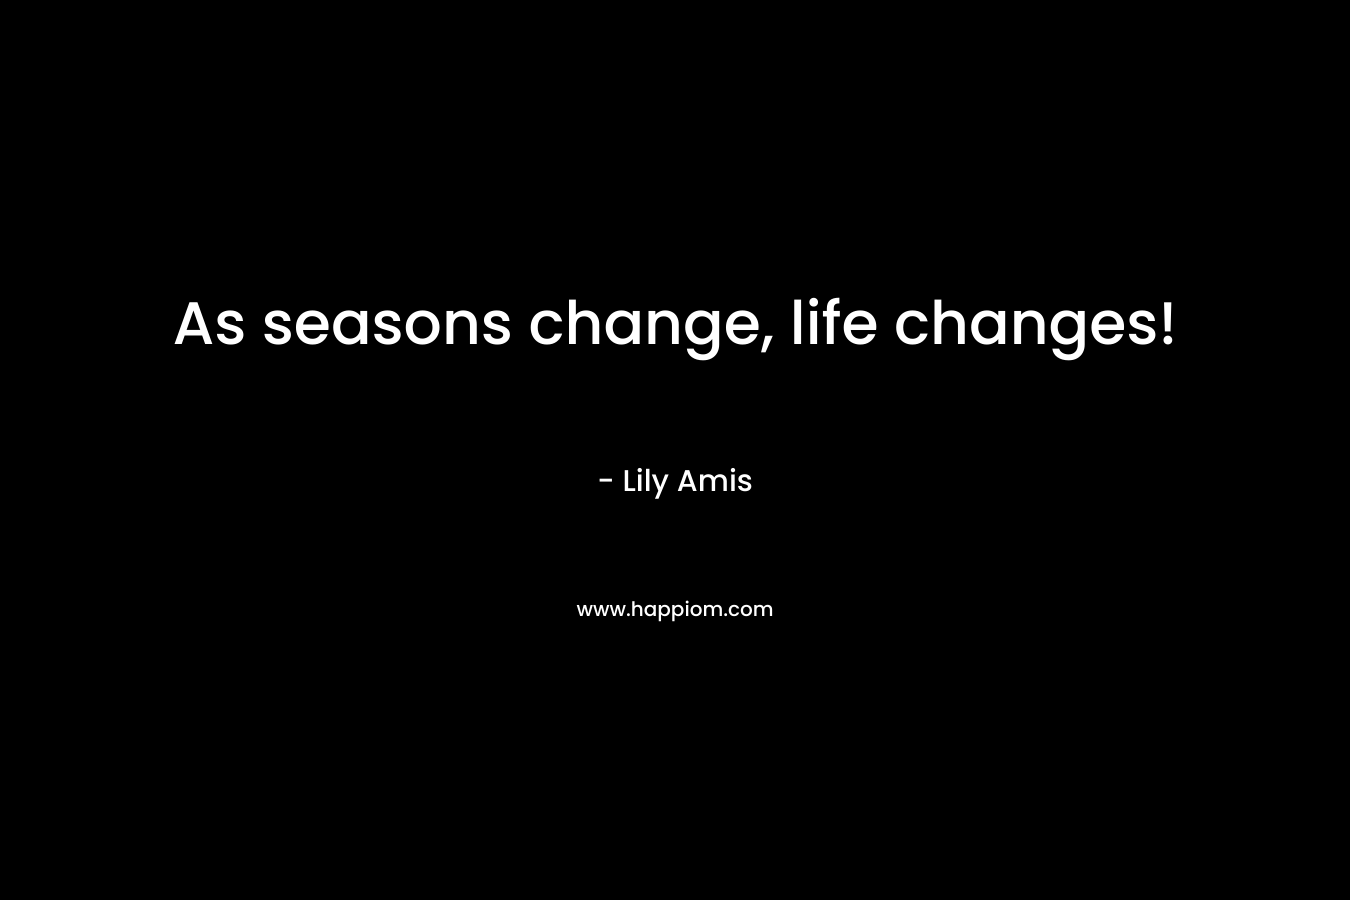 As seasons change, life changes!